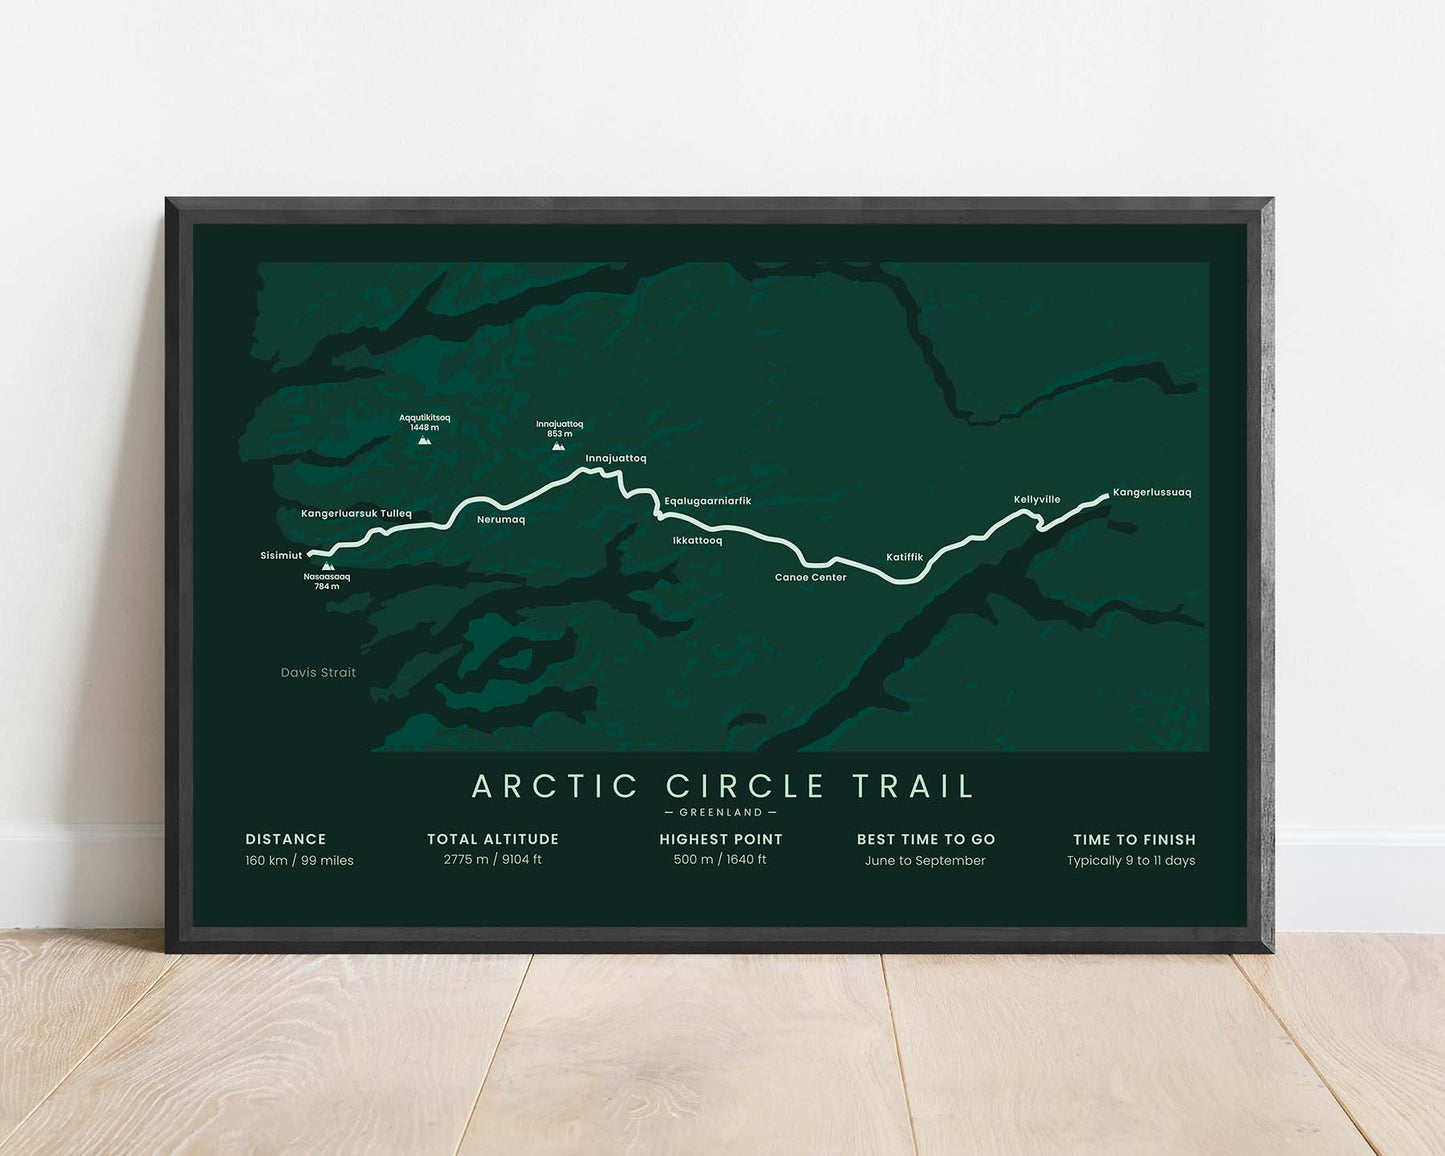 Arctic Circle Trail (Sisimiut, Kangerlussuaq, Greenland) Path Wall Art with Green Background